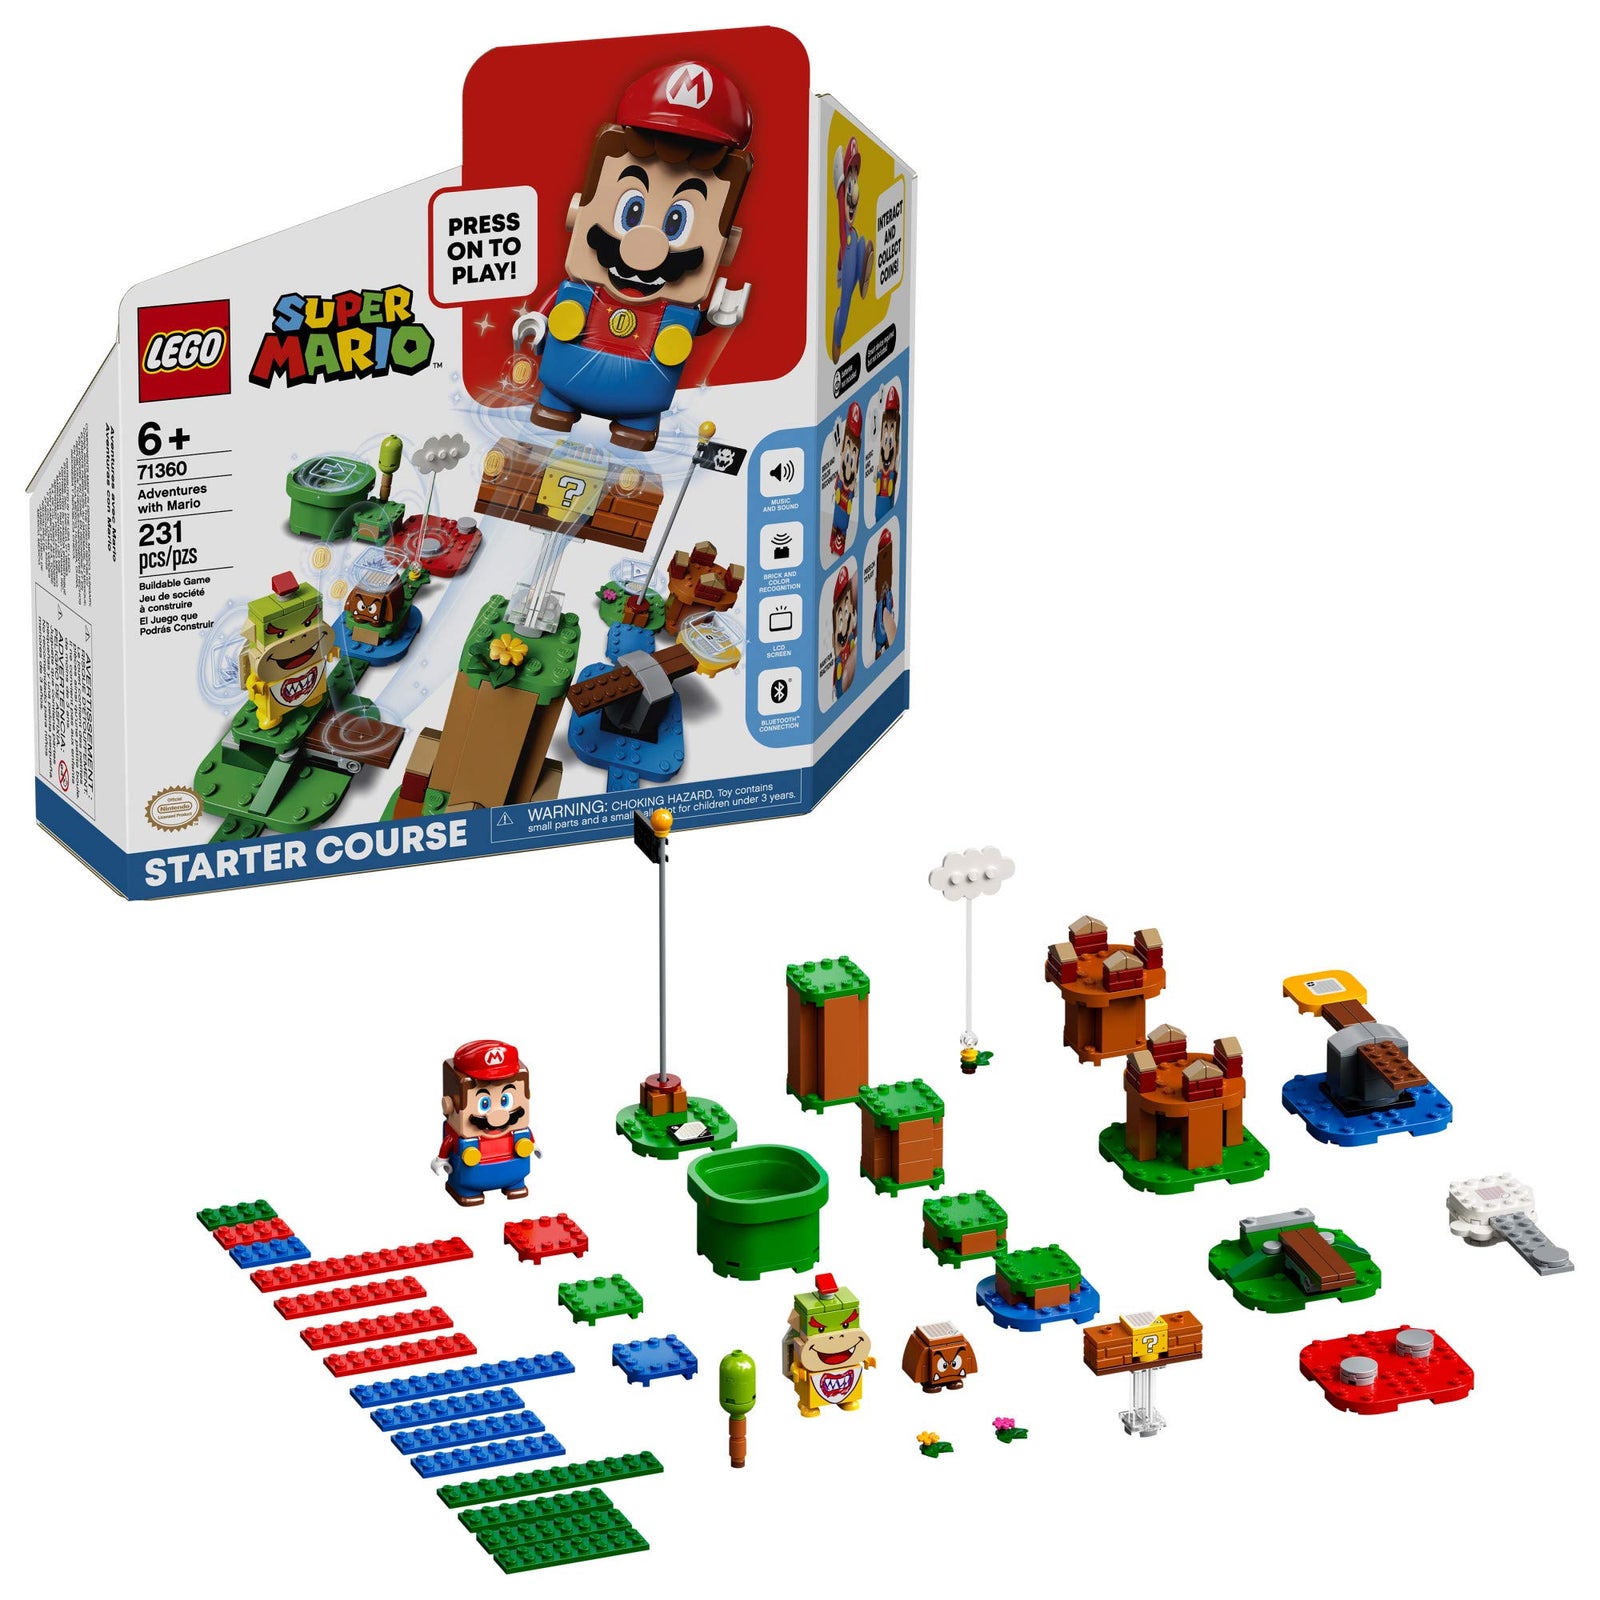 LEGO Super Mario Adventures with Mario Starter Course 71360 Building Kit, Interactive Set Featuring Mario, Bowser Jr. and Goomba Figures (231 Pieces)